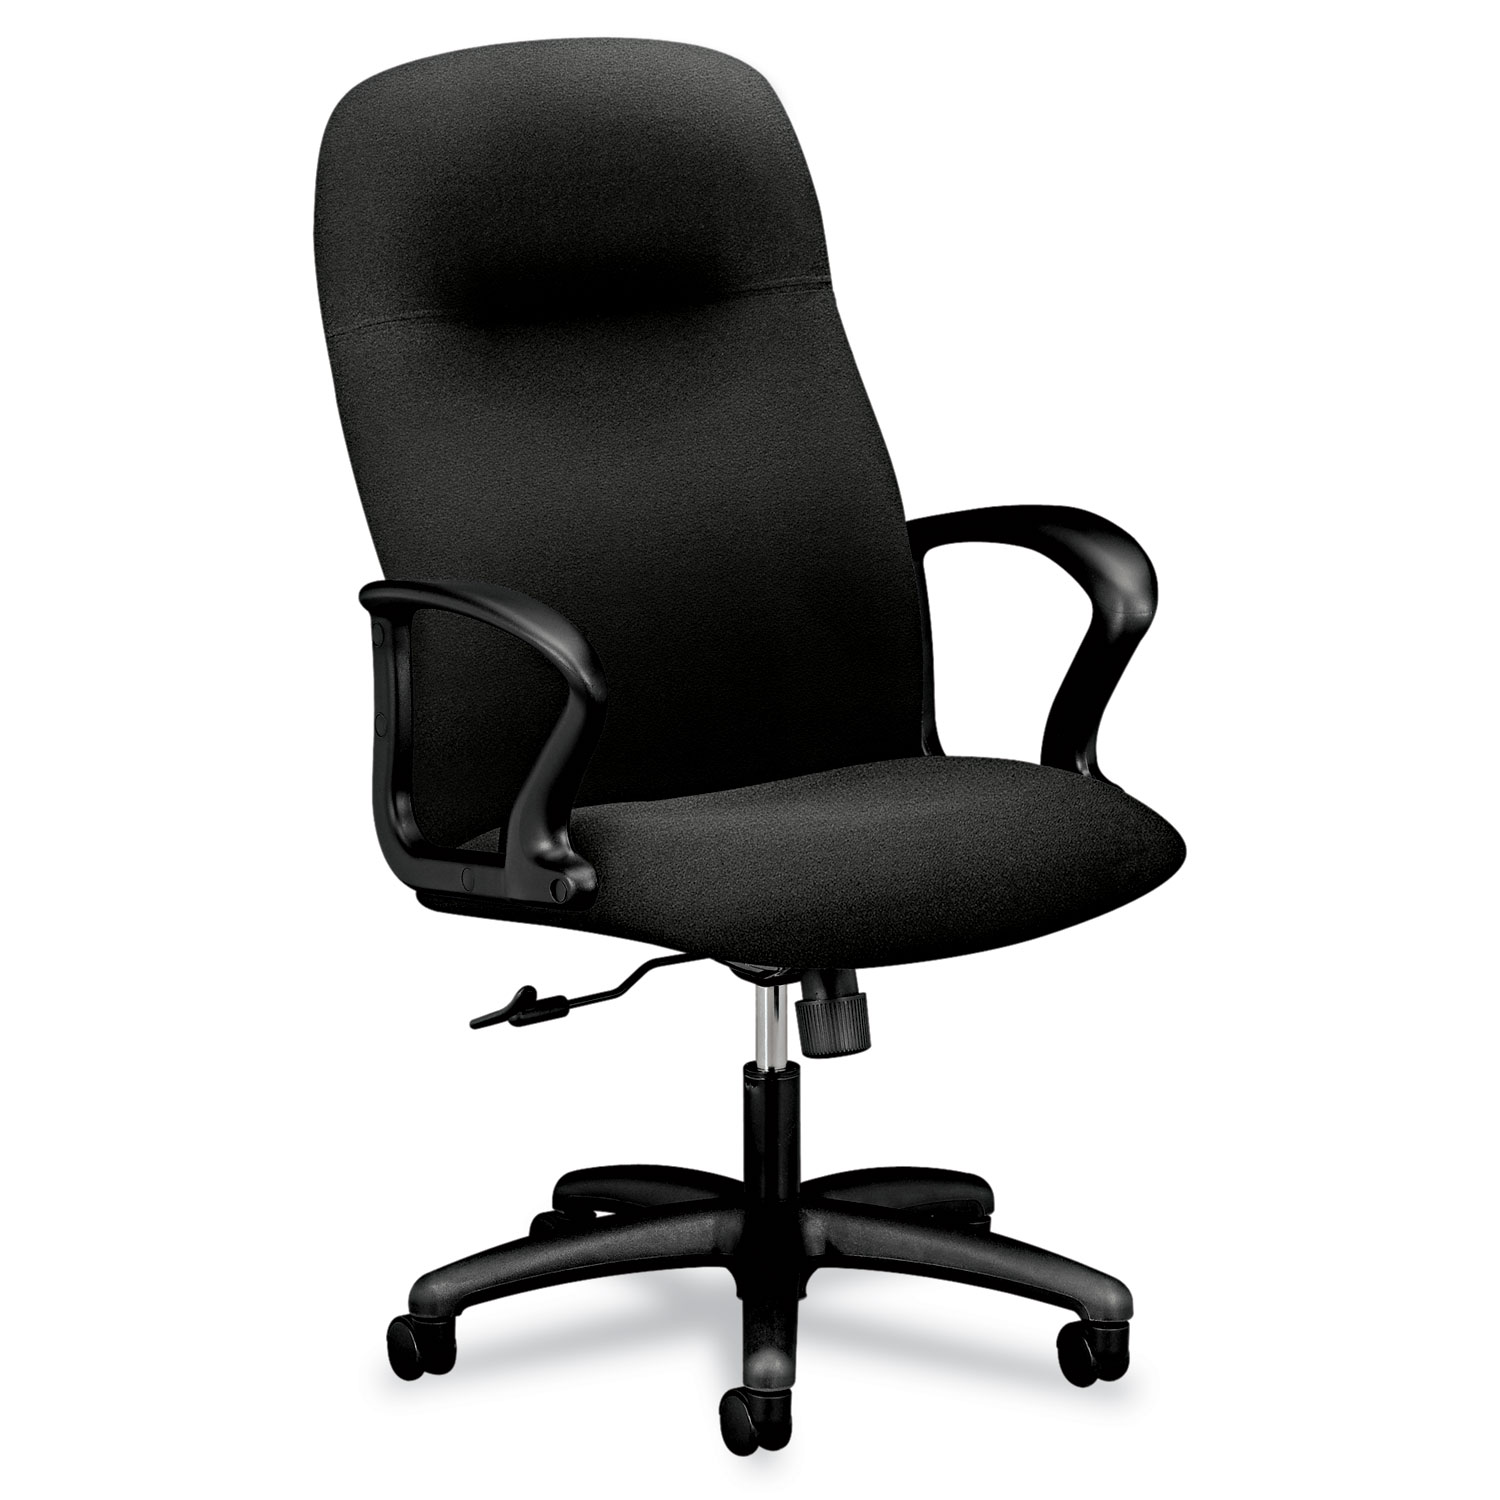 Gamut Series Executive High-Back Swivel/Tilt Chair, Black